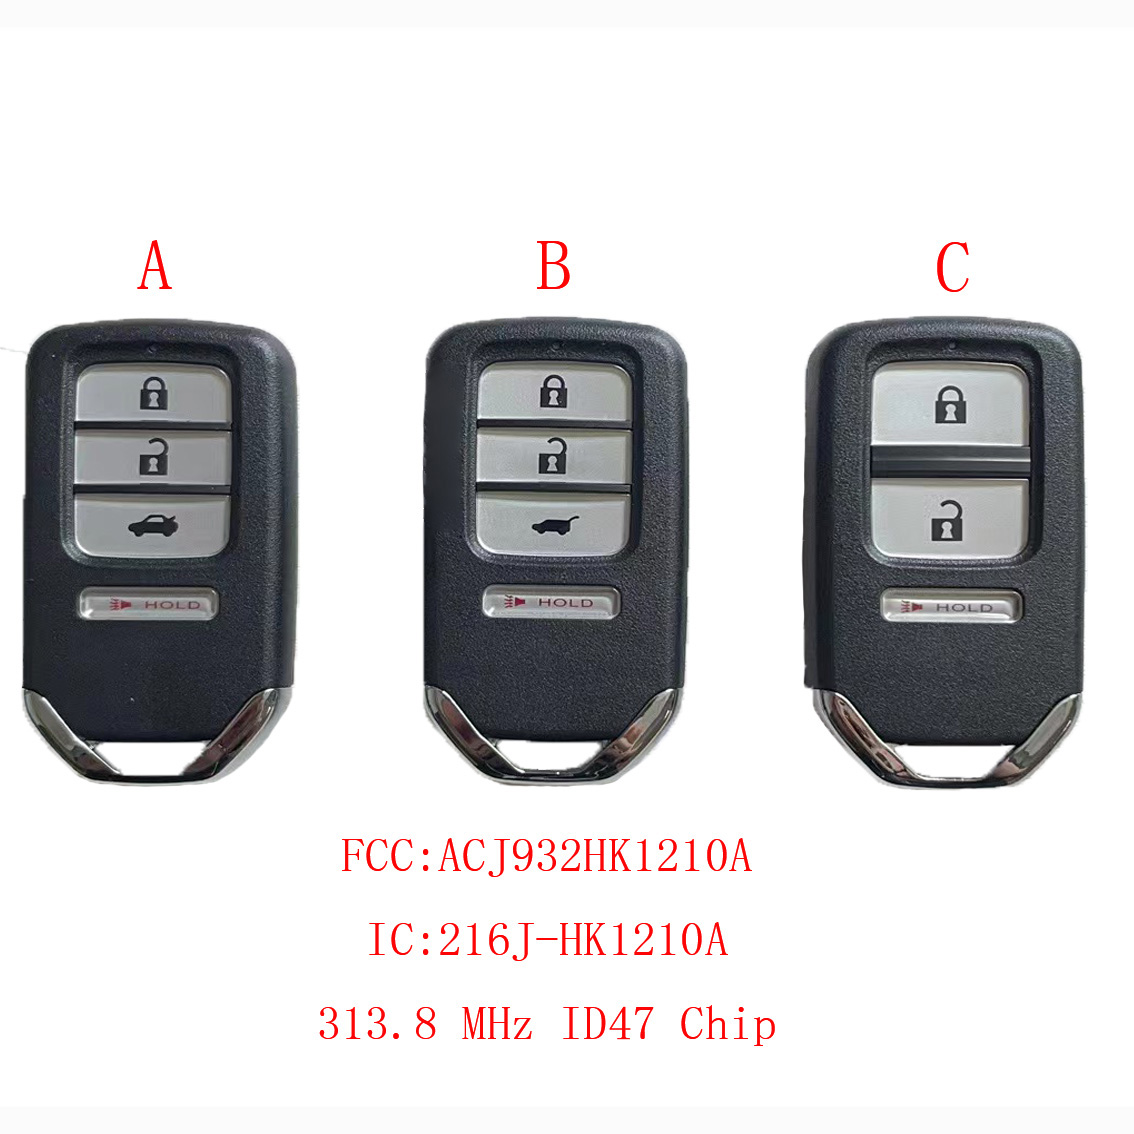  Original Suitable For Honda 313.8 MHz ID47 Chip FCCID ACJ932HK1210A IC: 216J-HK1210A Smart remote Car  Key